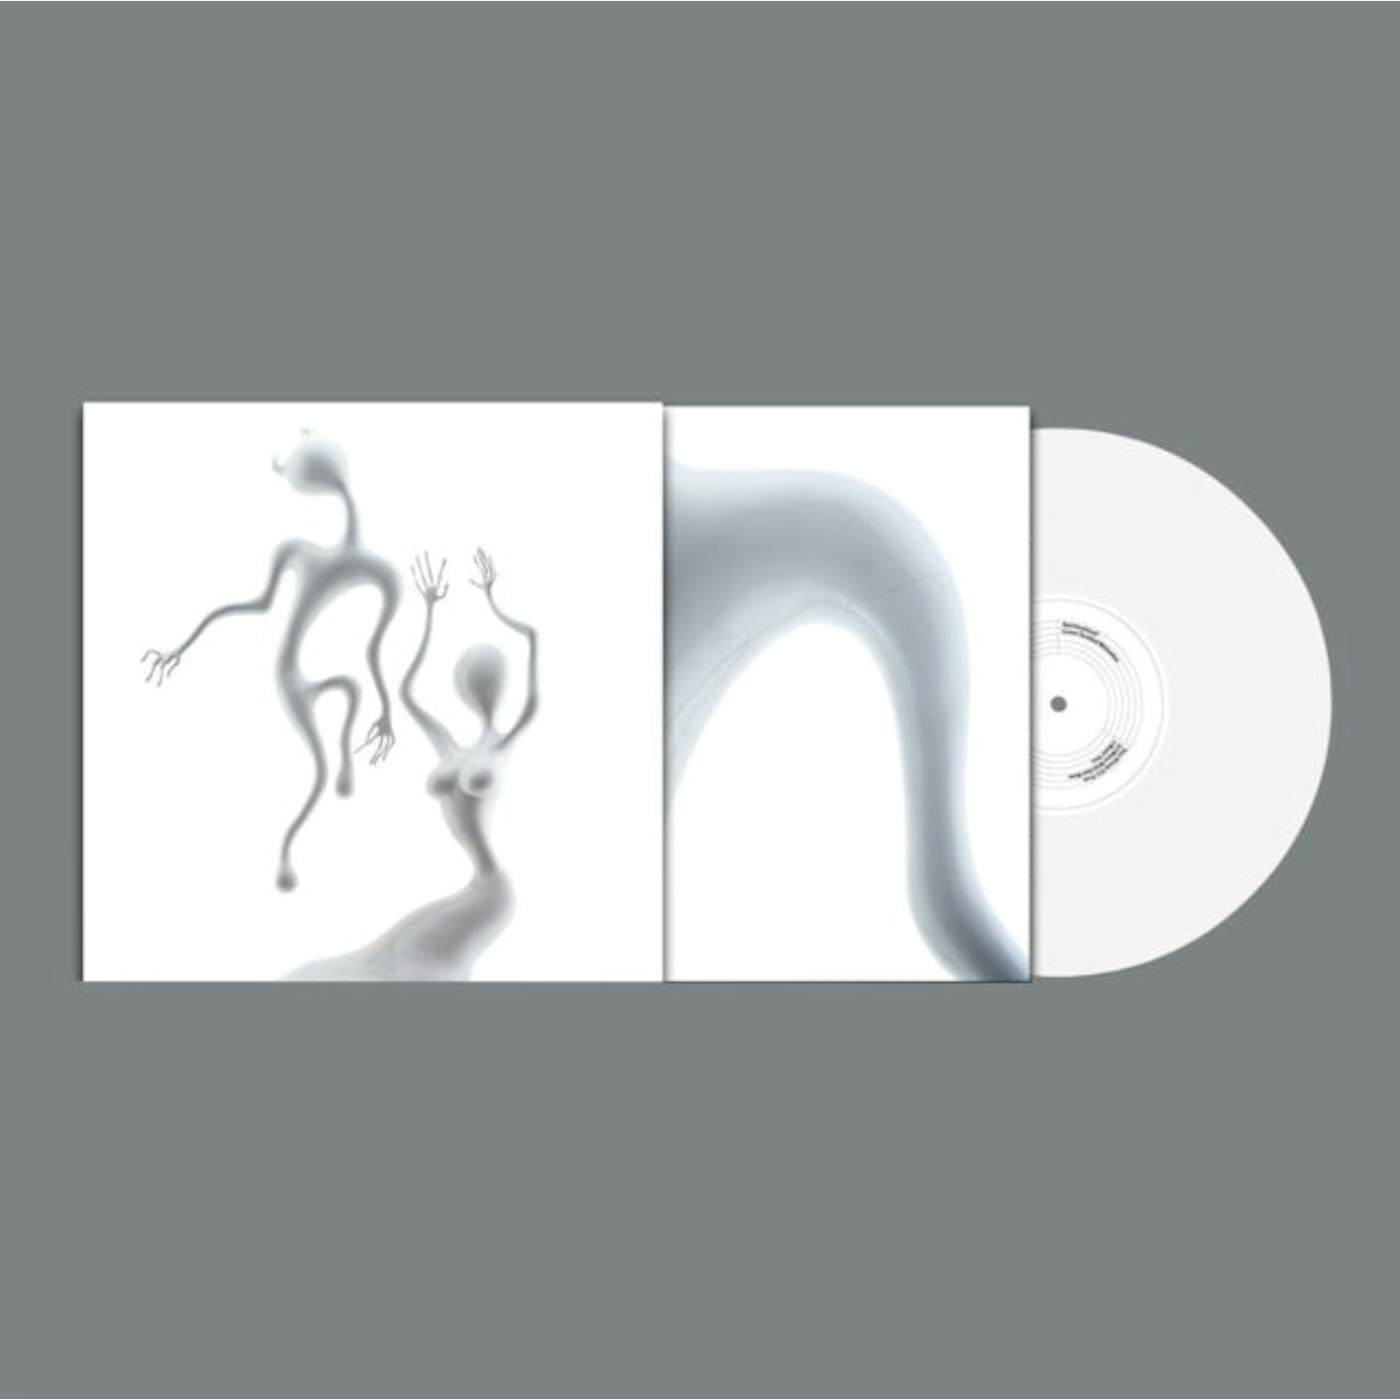  Spiritualized LP - Lazer Guided Melodies (White Vinyl)